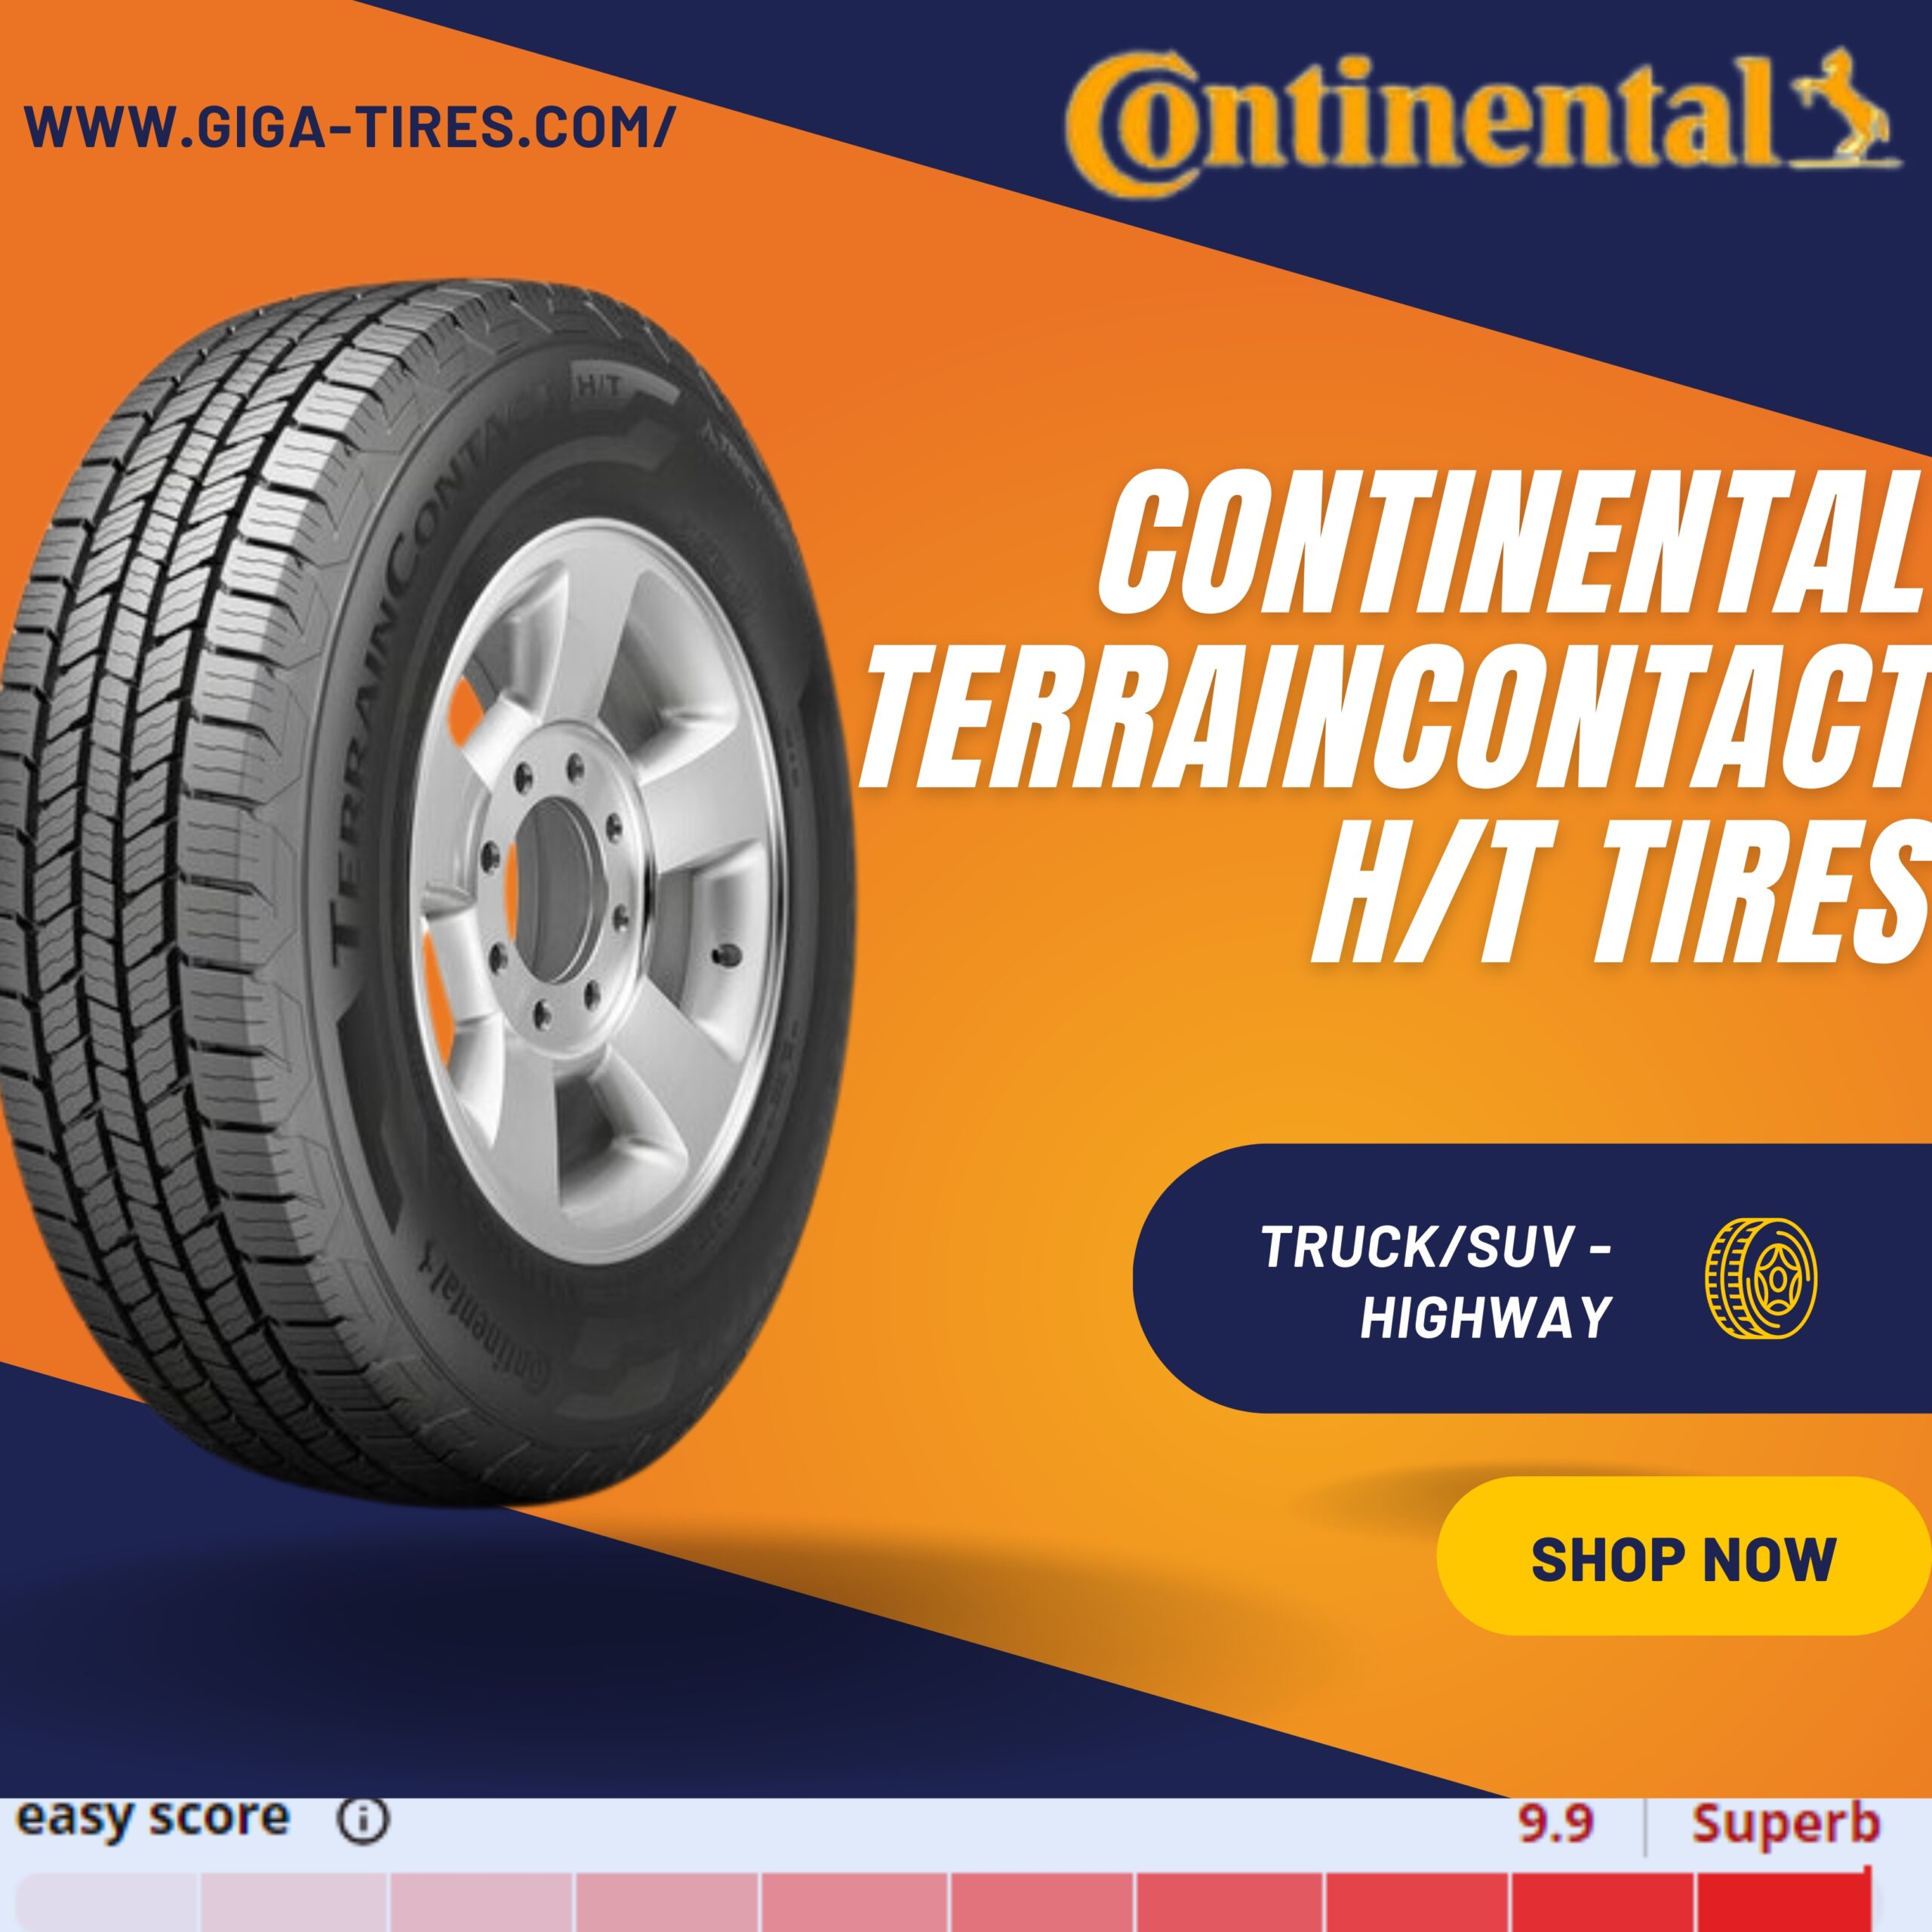 Continental TerrainContact H/T Tires